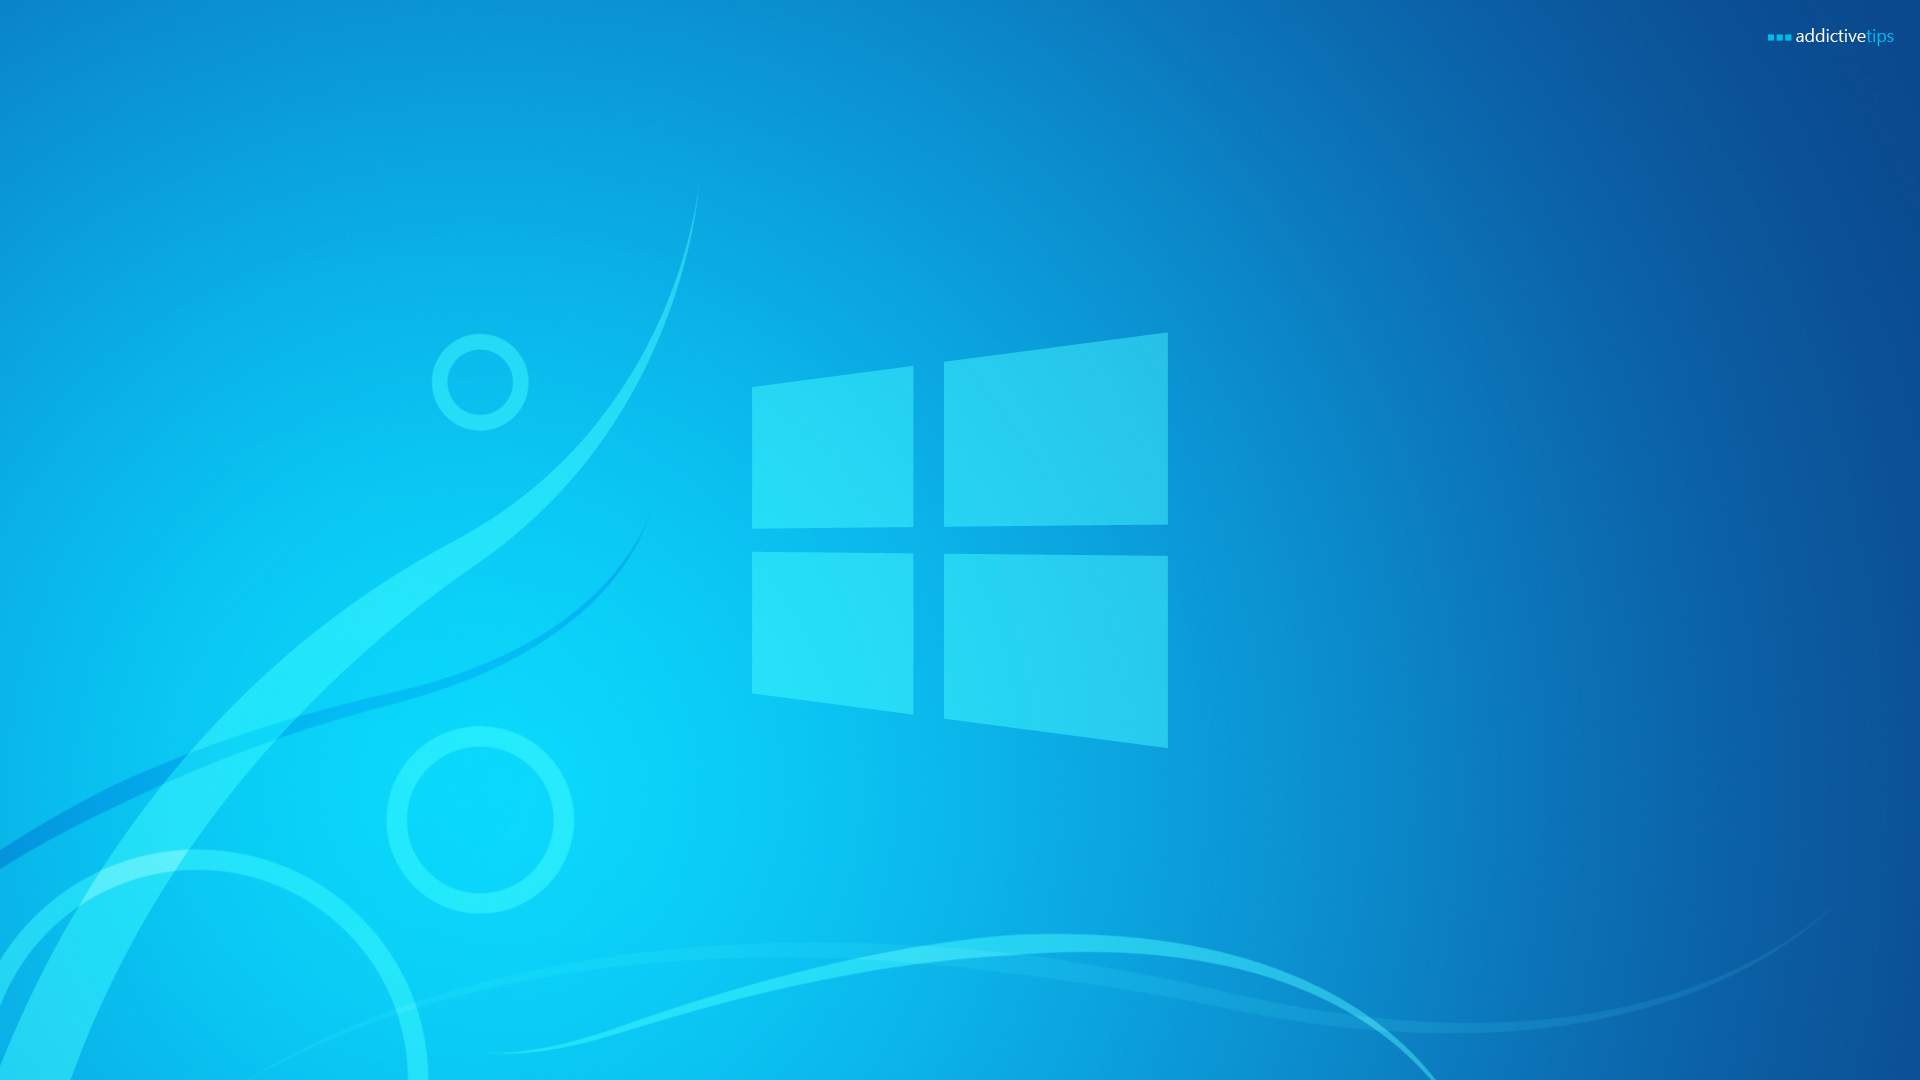 20 Widescreen HD Wallpapers For Windows 8 Desktop Background 1920x1080